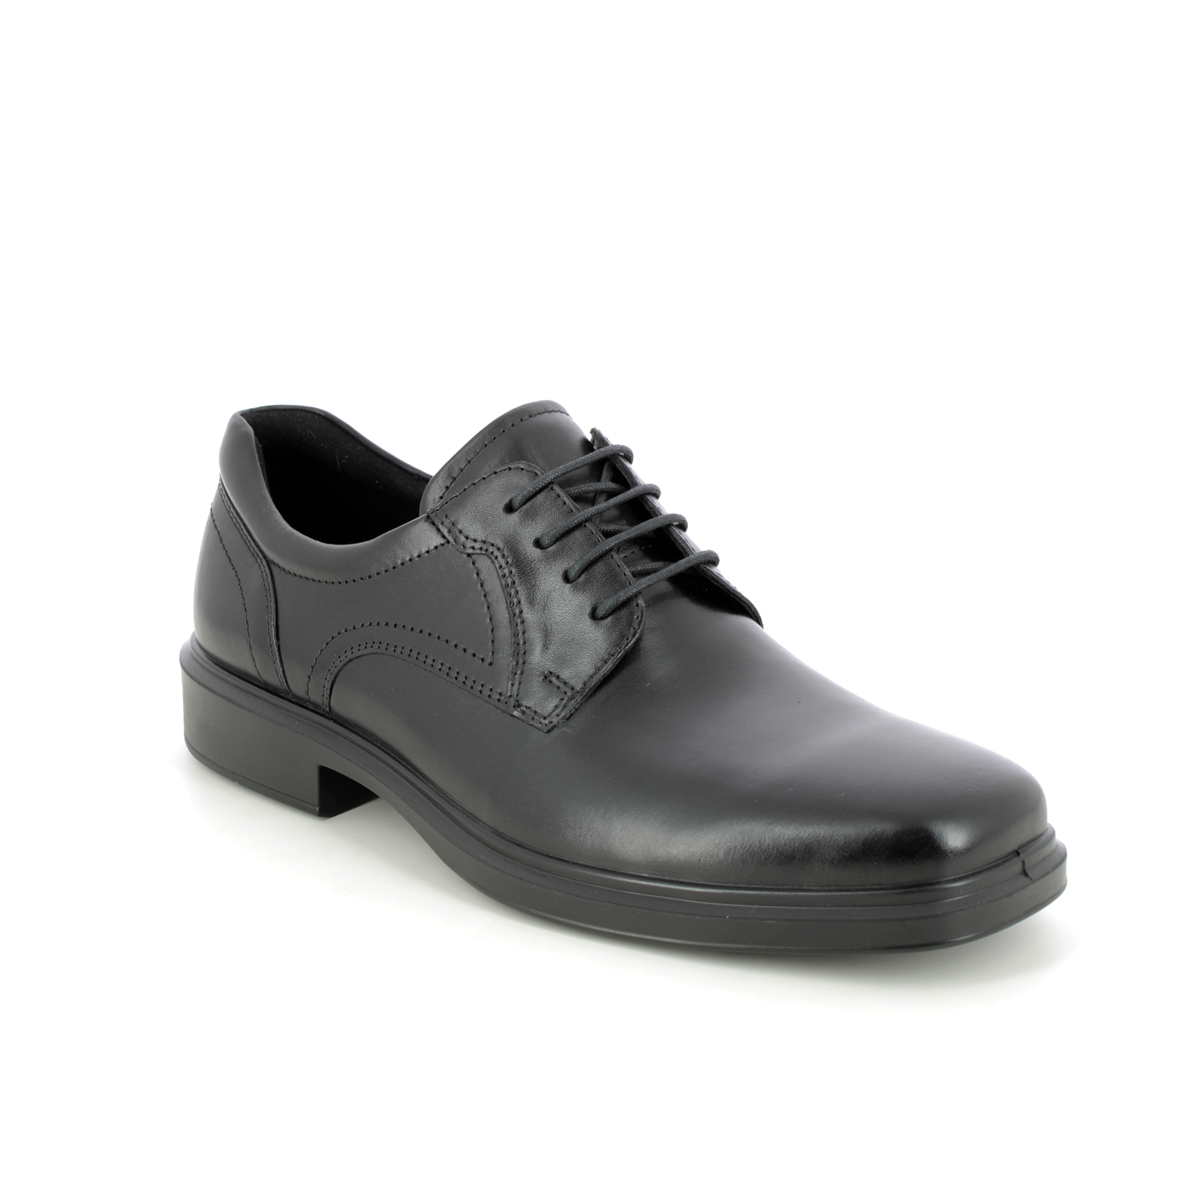 Ecco Helsinki 2 Plain Black Leather Mens Formal Shoes 500164-01001 In Size 44 In Plain Black Leather